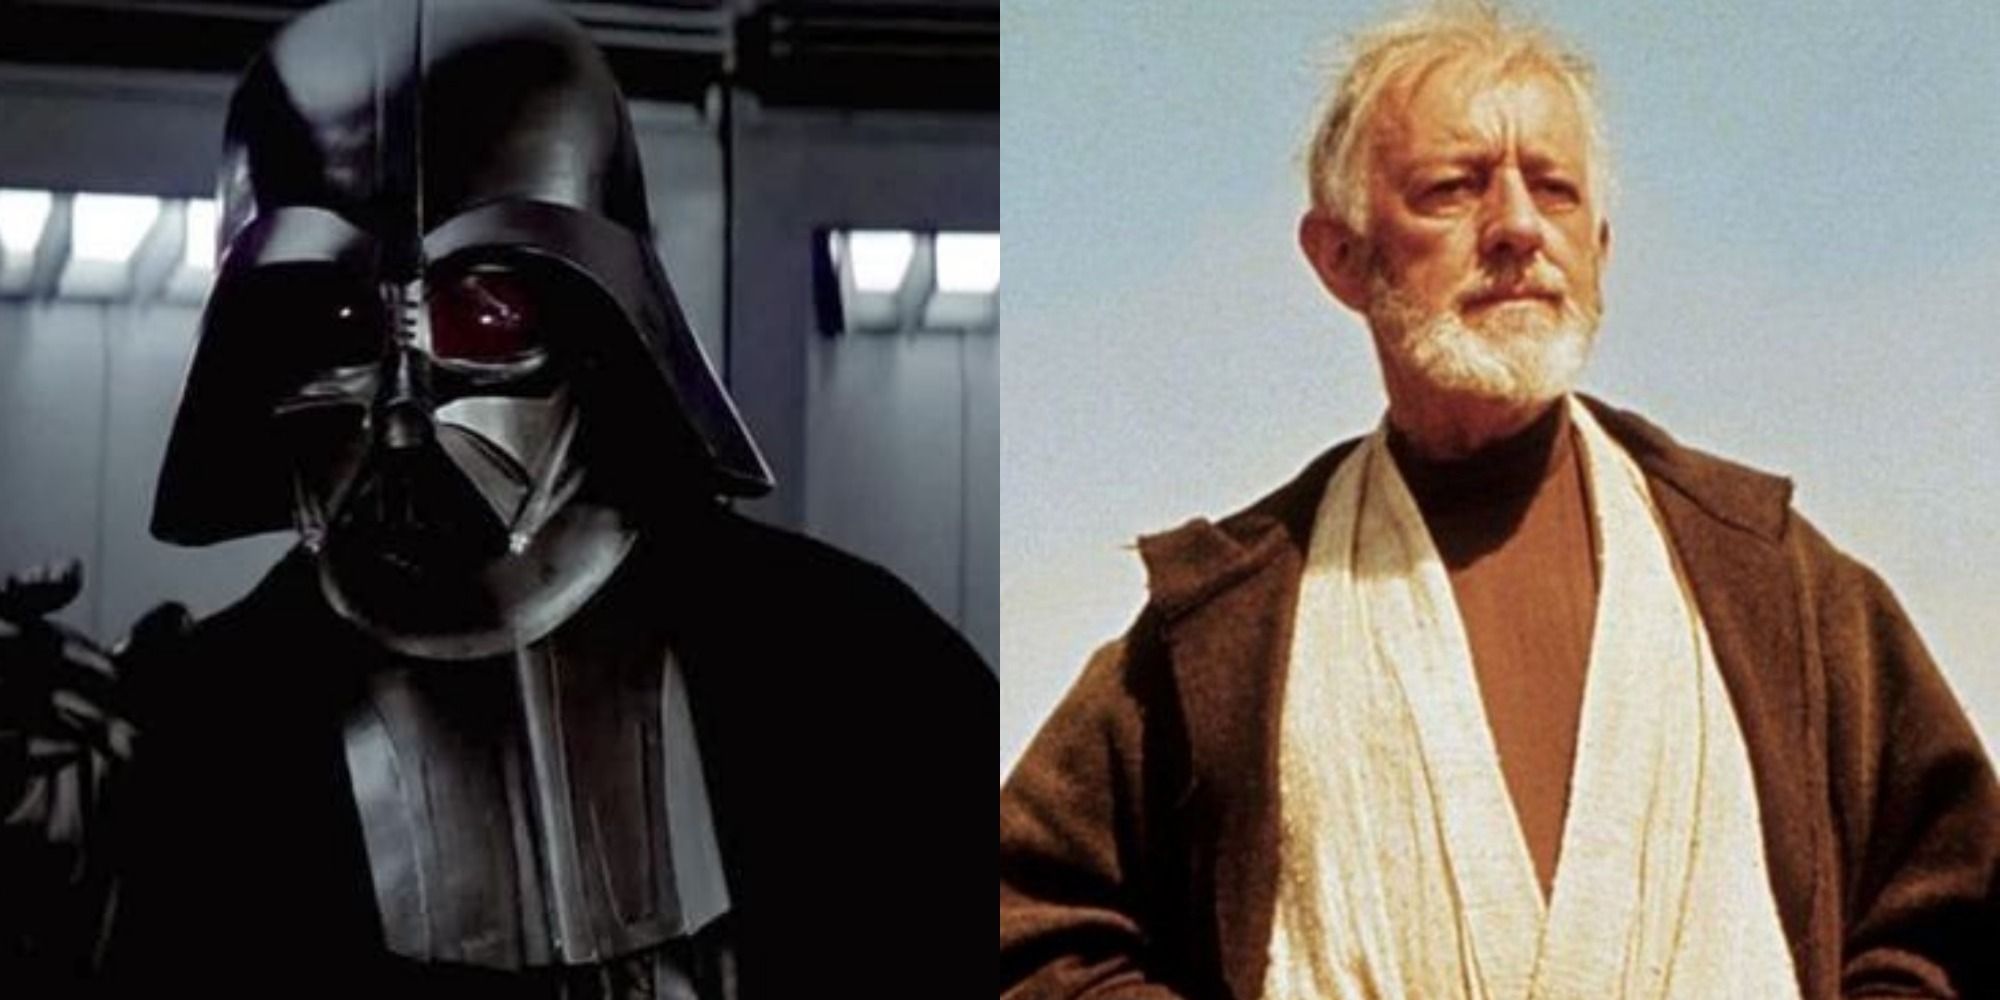 Star Wars A New Hope Obi-Wan Kenobi and Darth Vader featured image